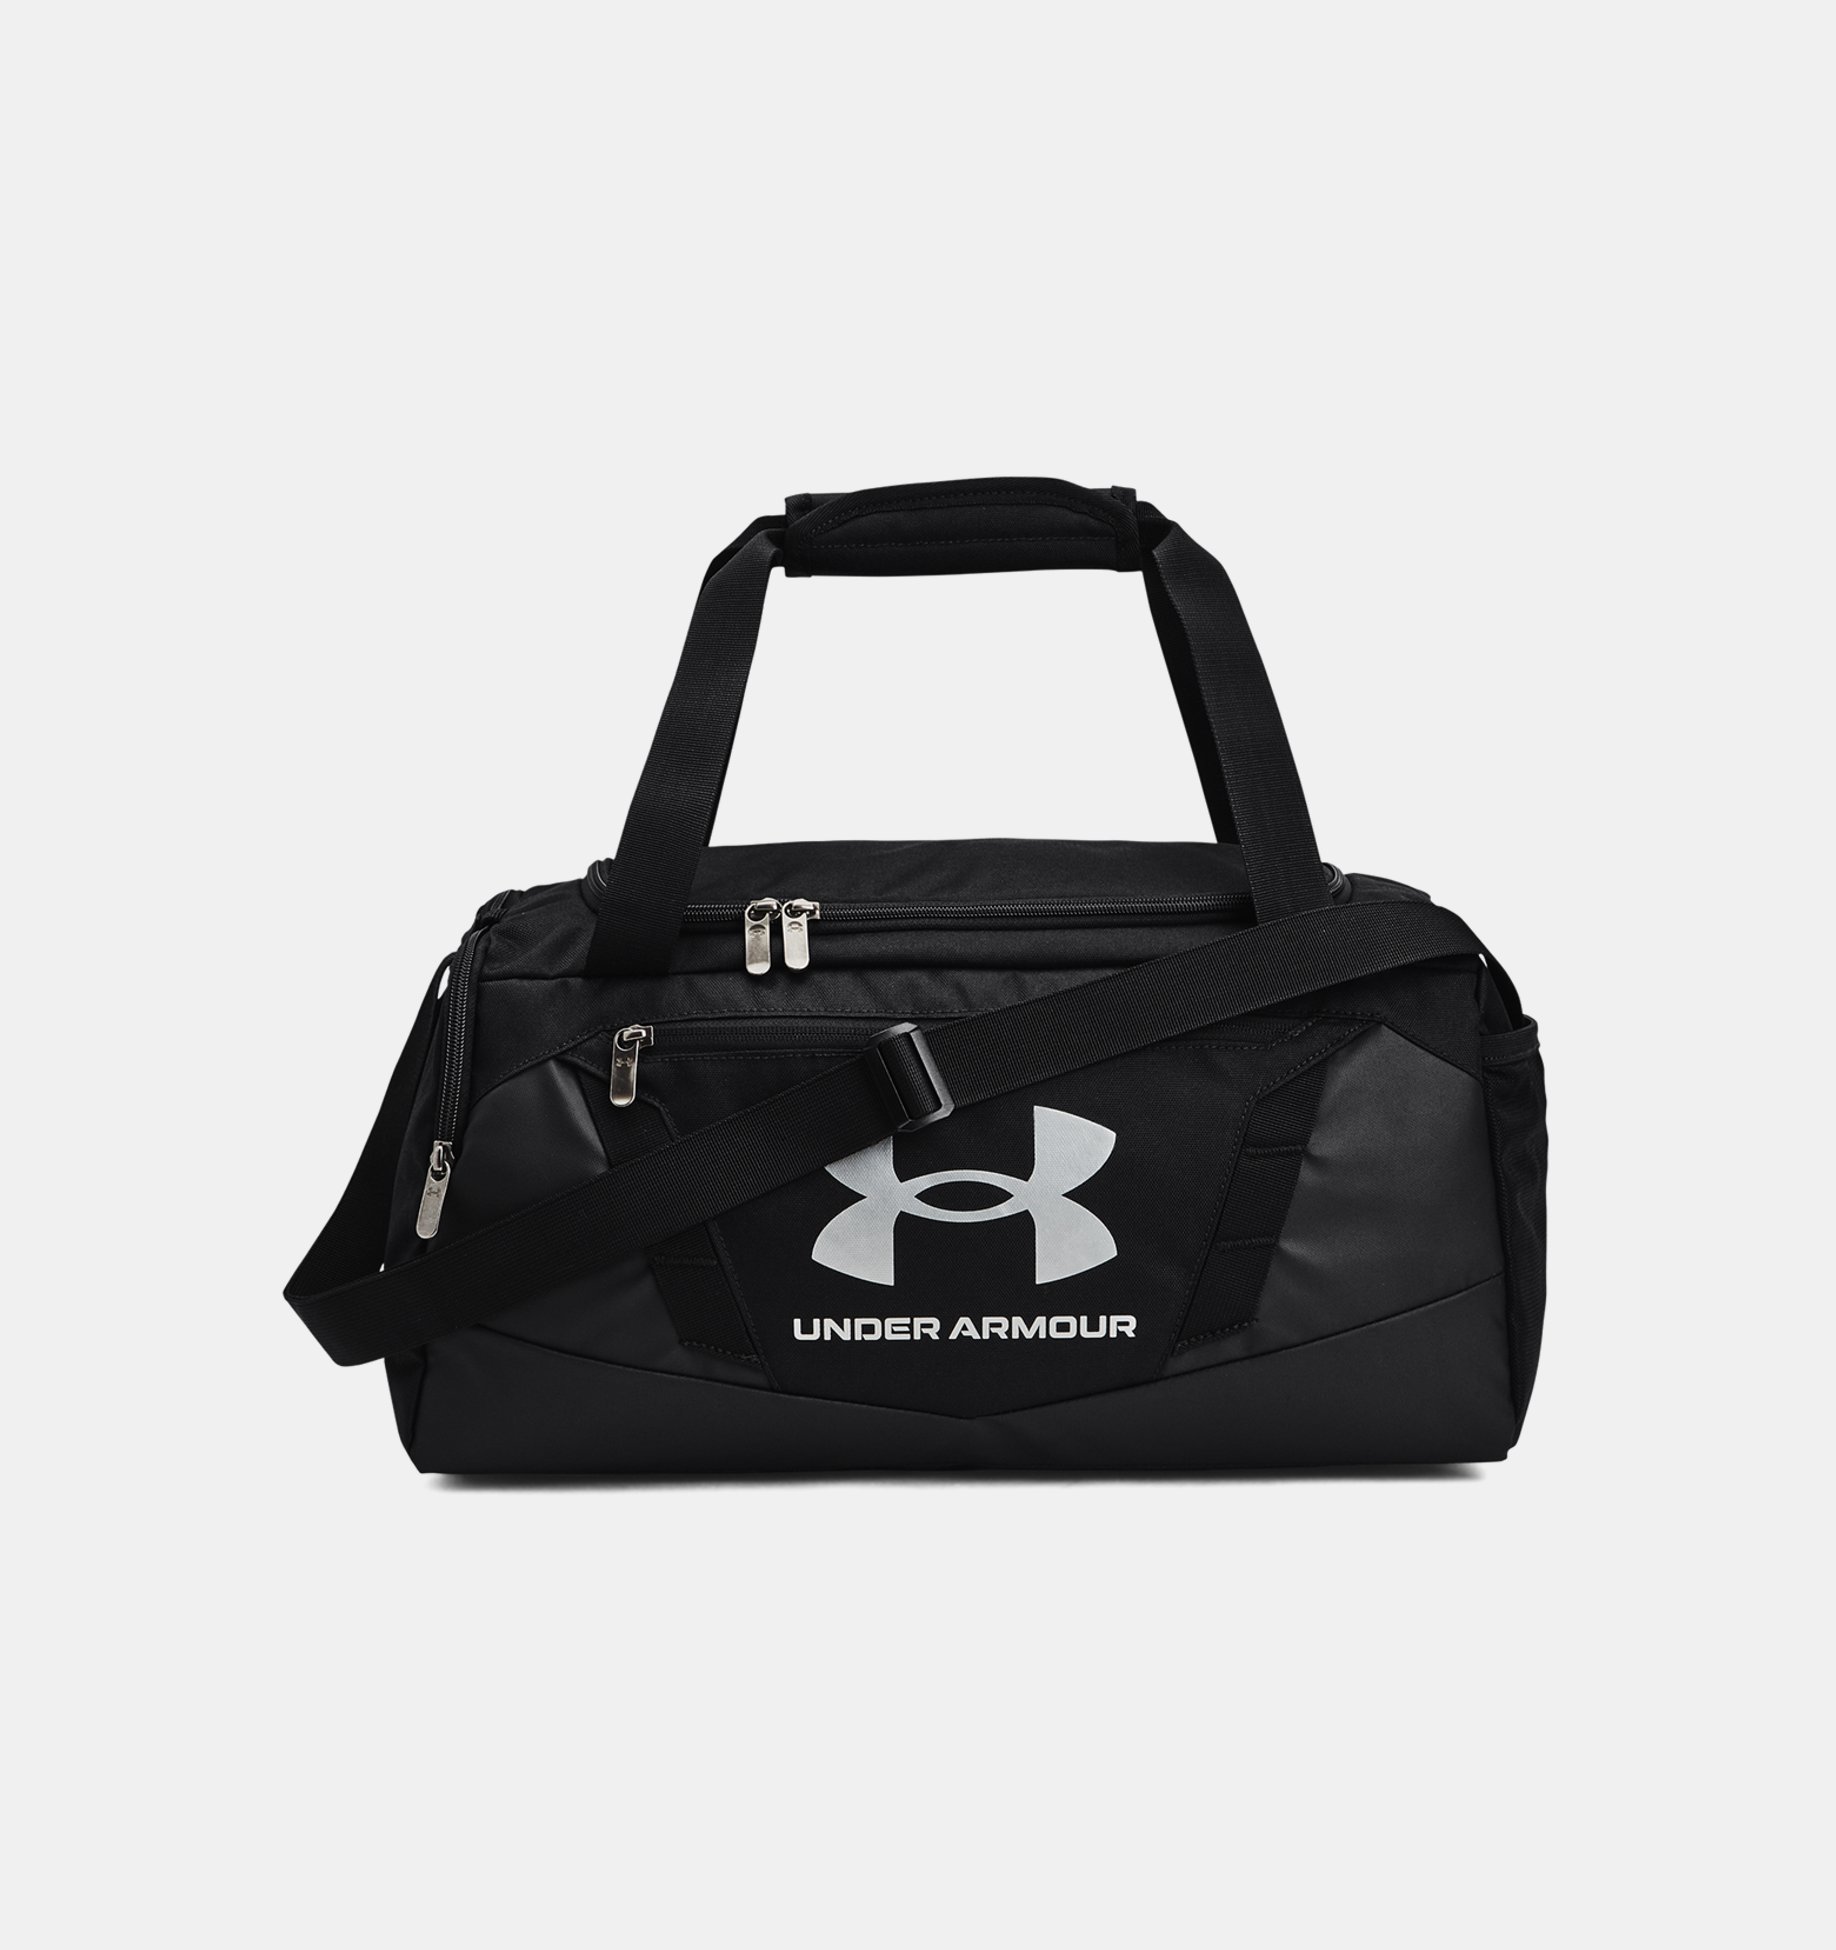 Underarmour UA Undeniable 5.0 XS Duffle Bag